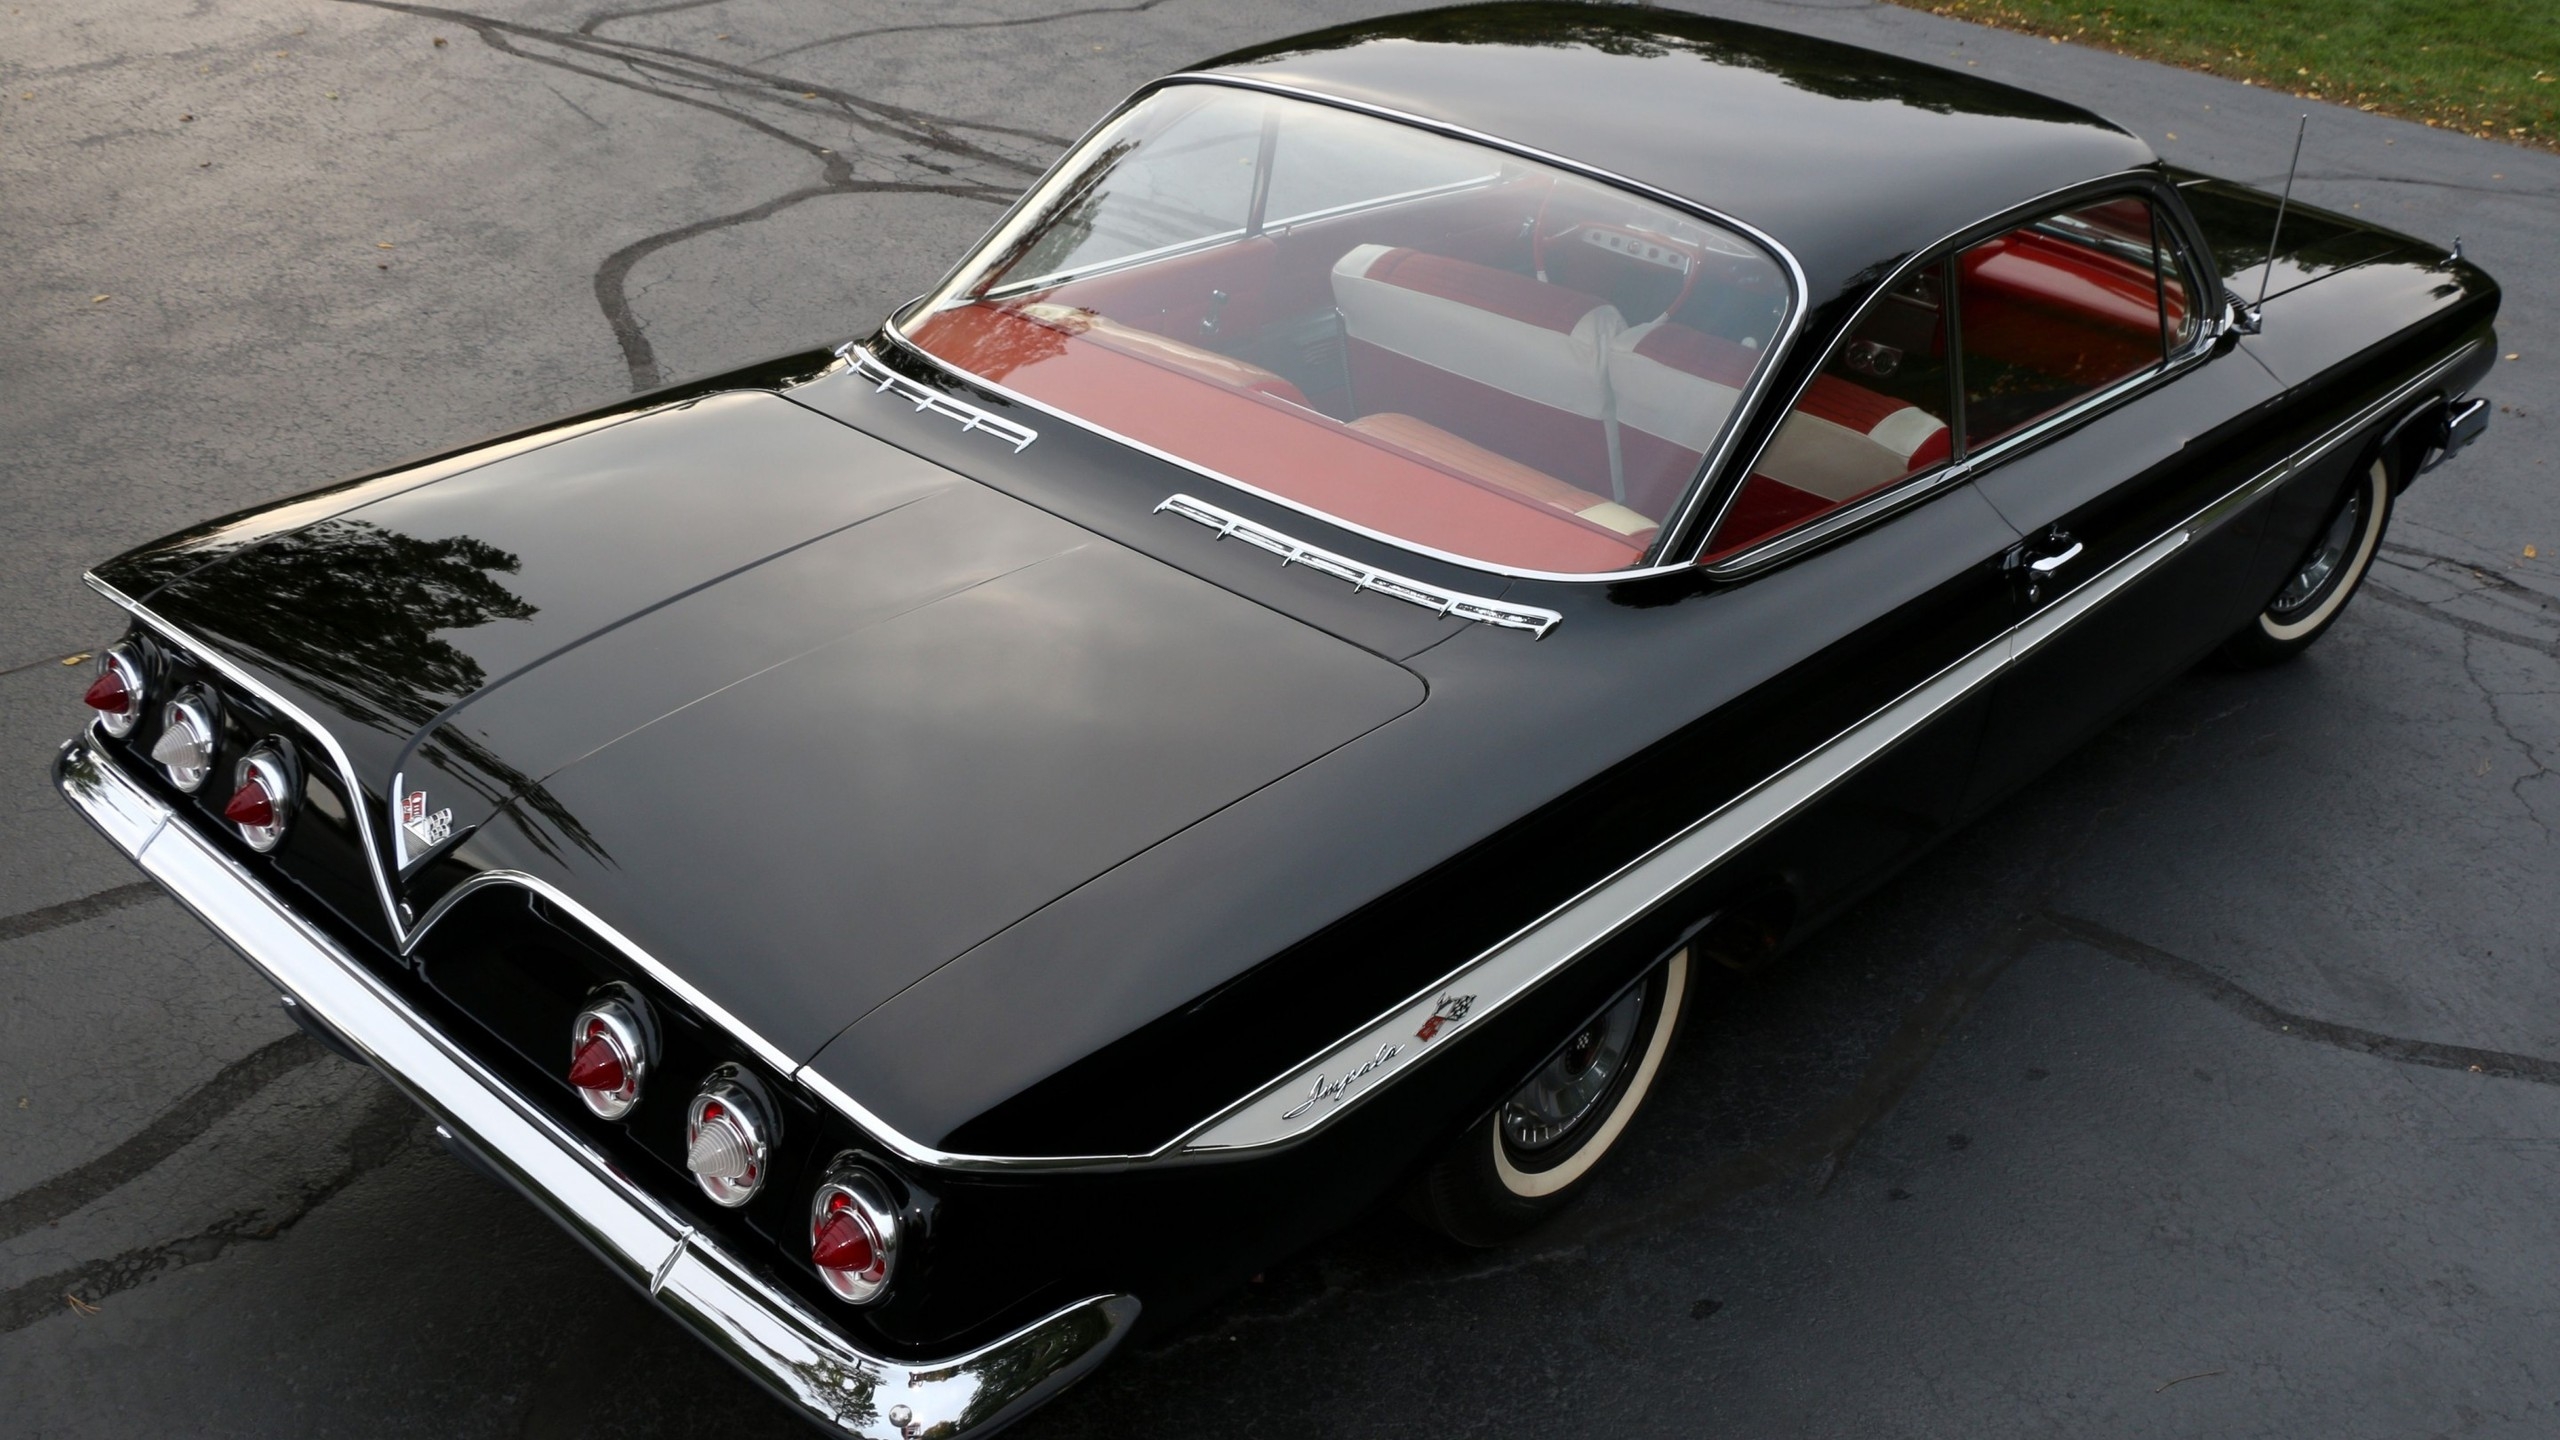 Black Chevrolet Impala 1961 for 2560x1440 HDTV resolution